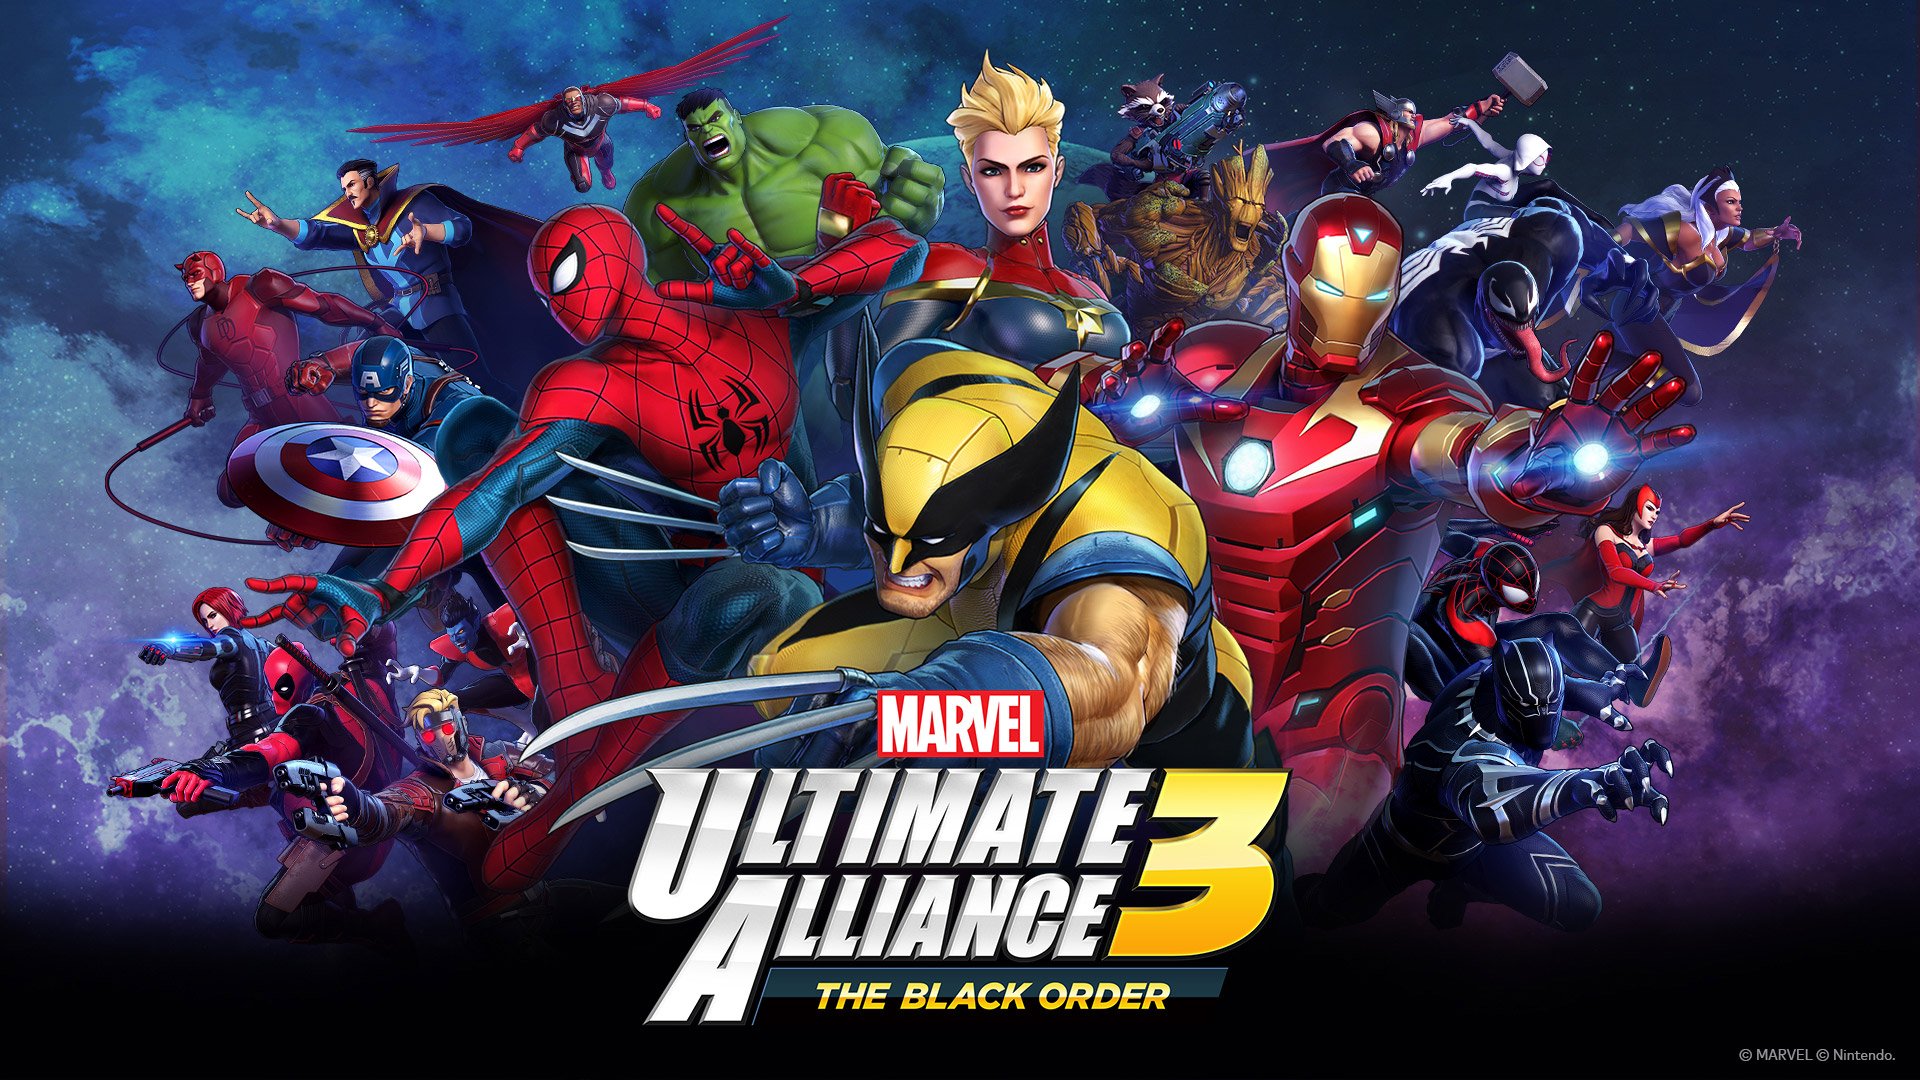 Marvel: Ultimate Alliance 2 (Xbox 360) Full HD - 1080 